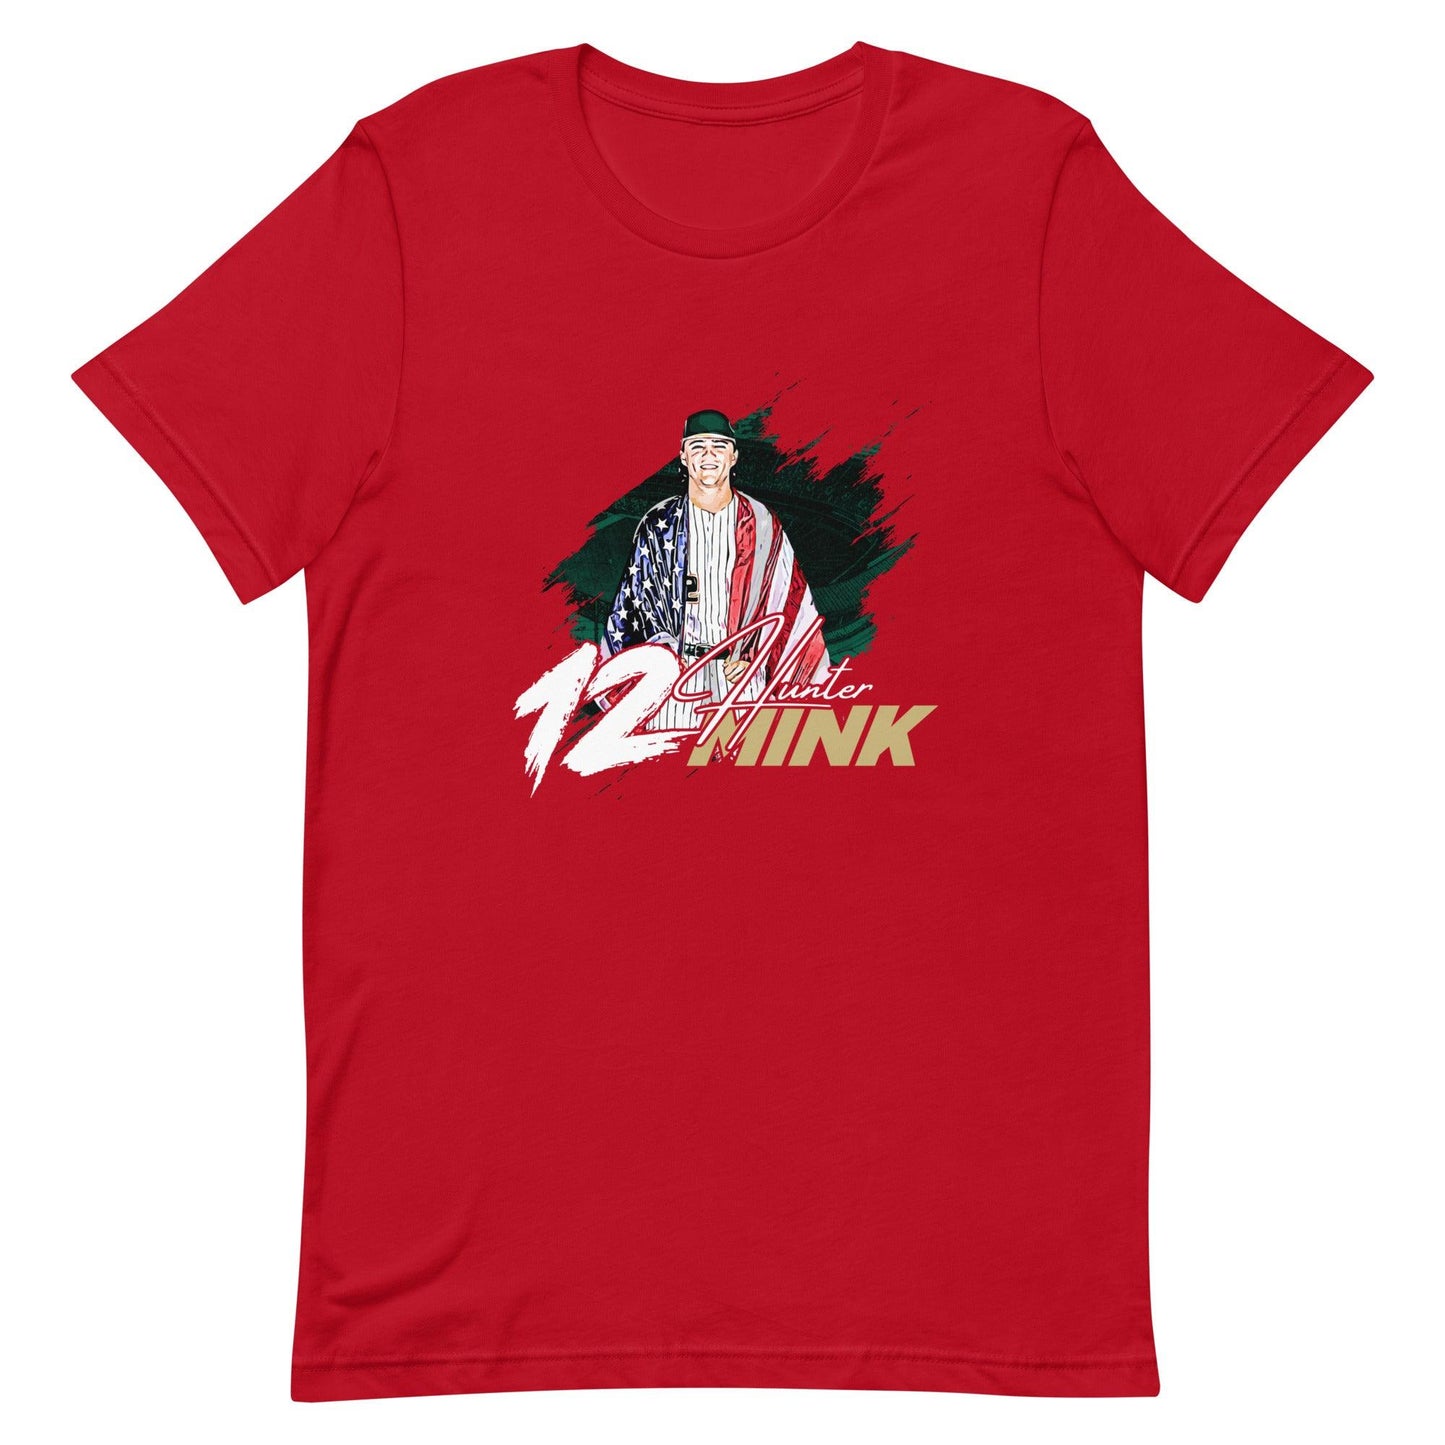 Hunter Mink "USA" t-shirt - Fan Arch